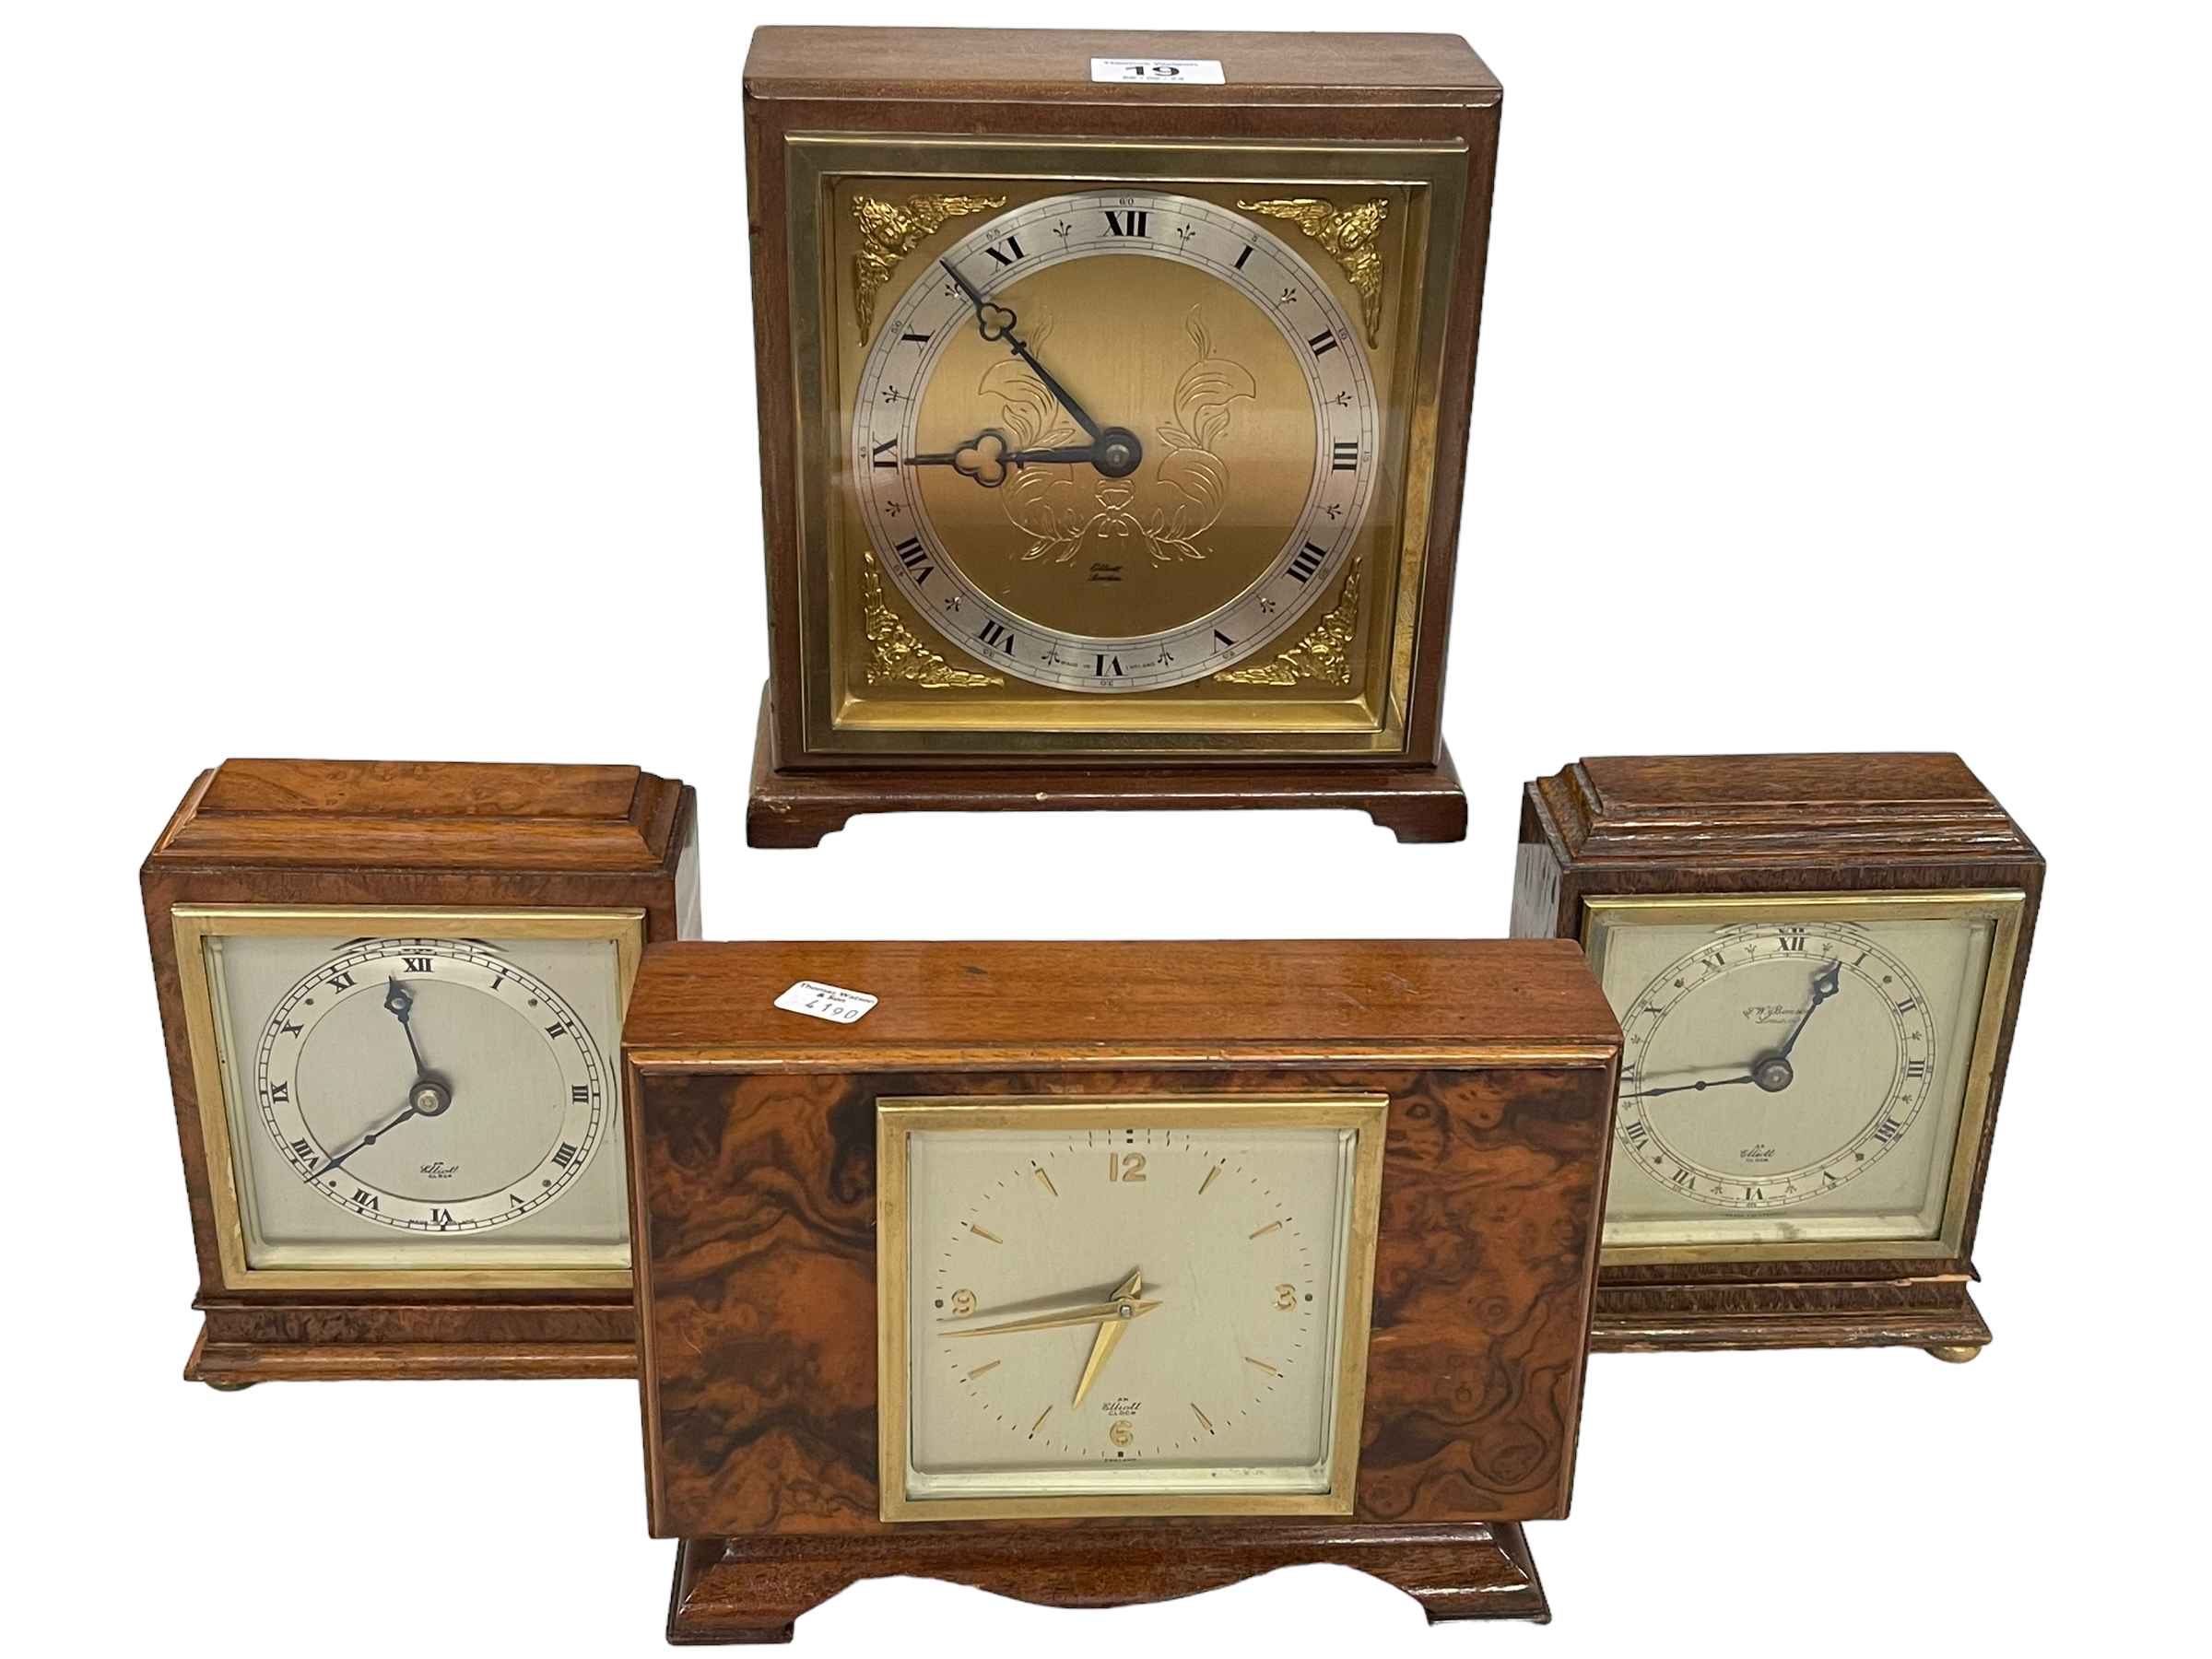 Four Elliott mantel clocks.